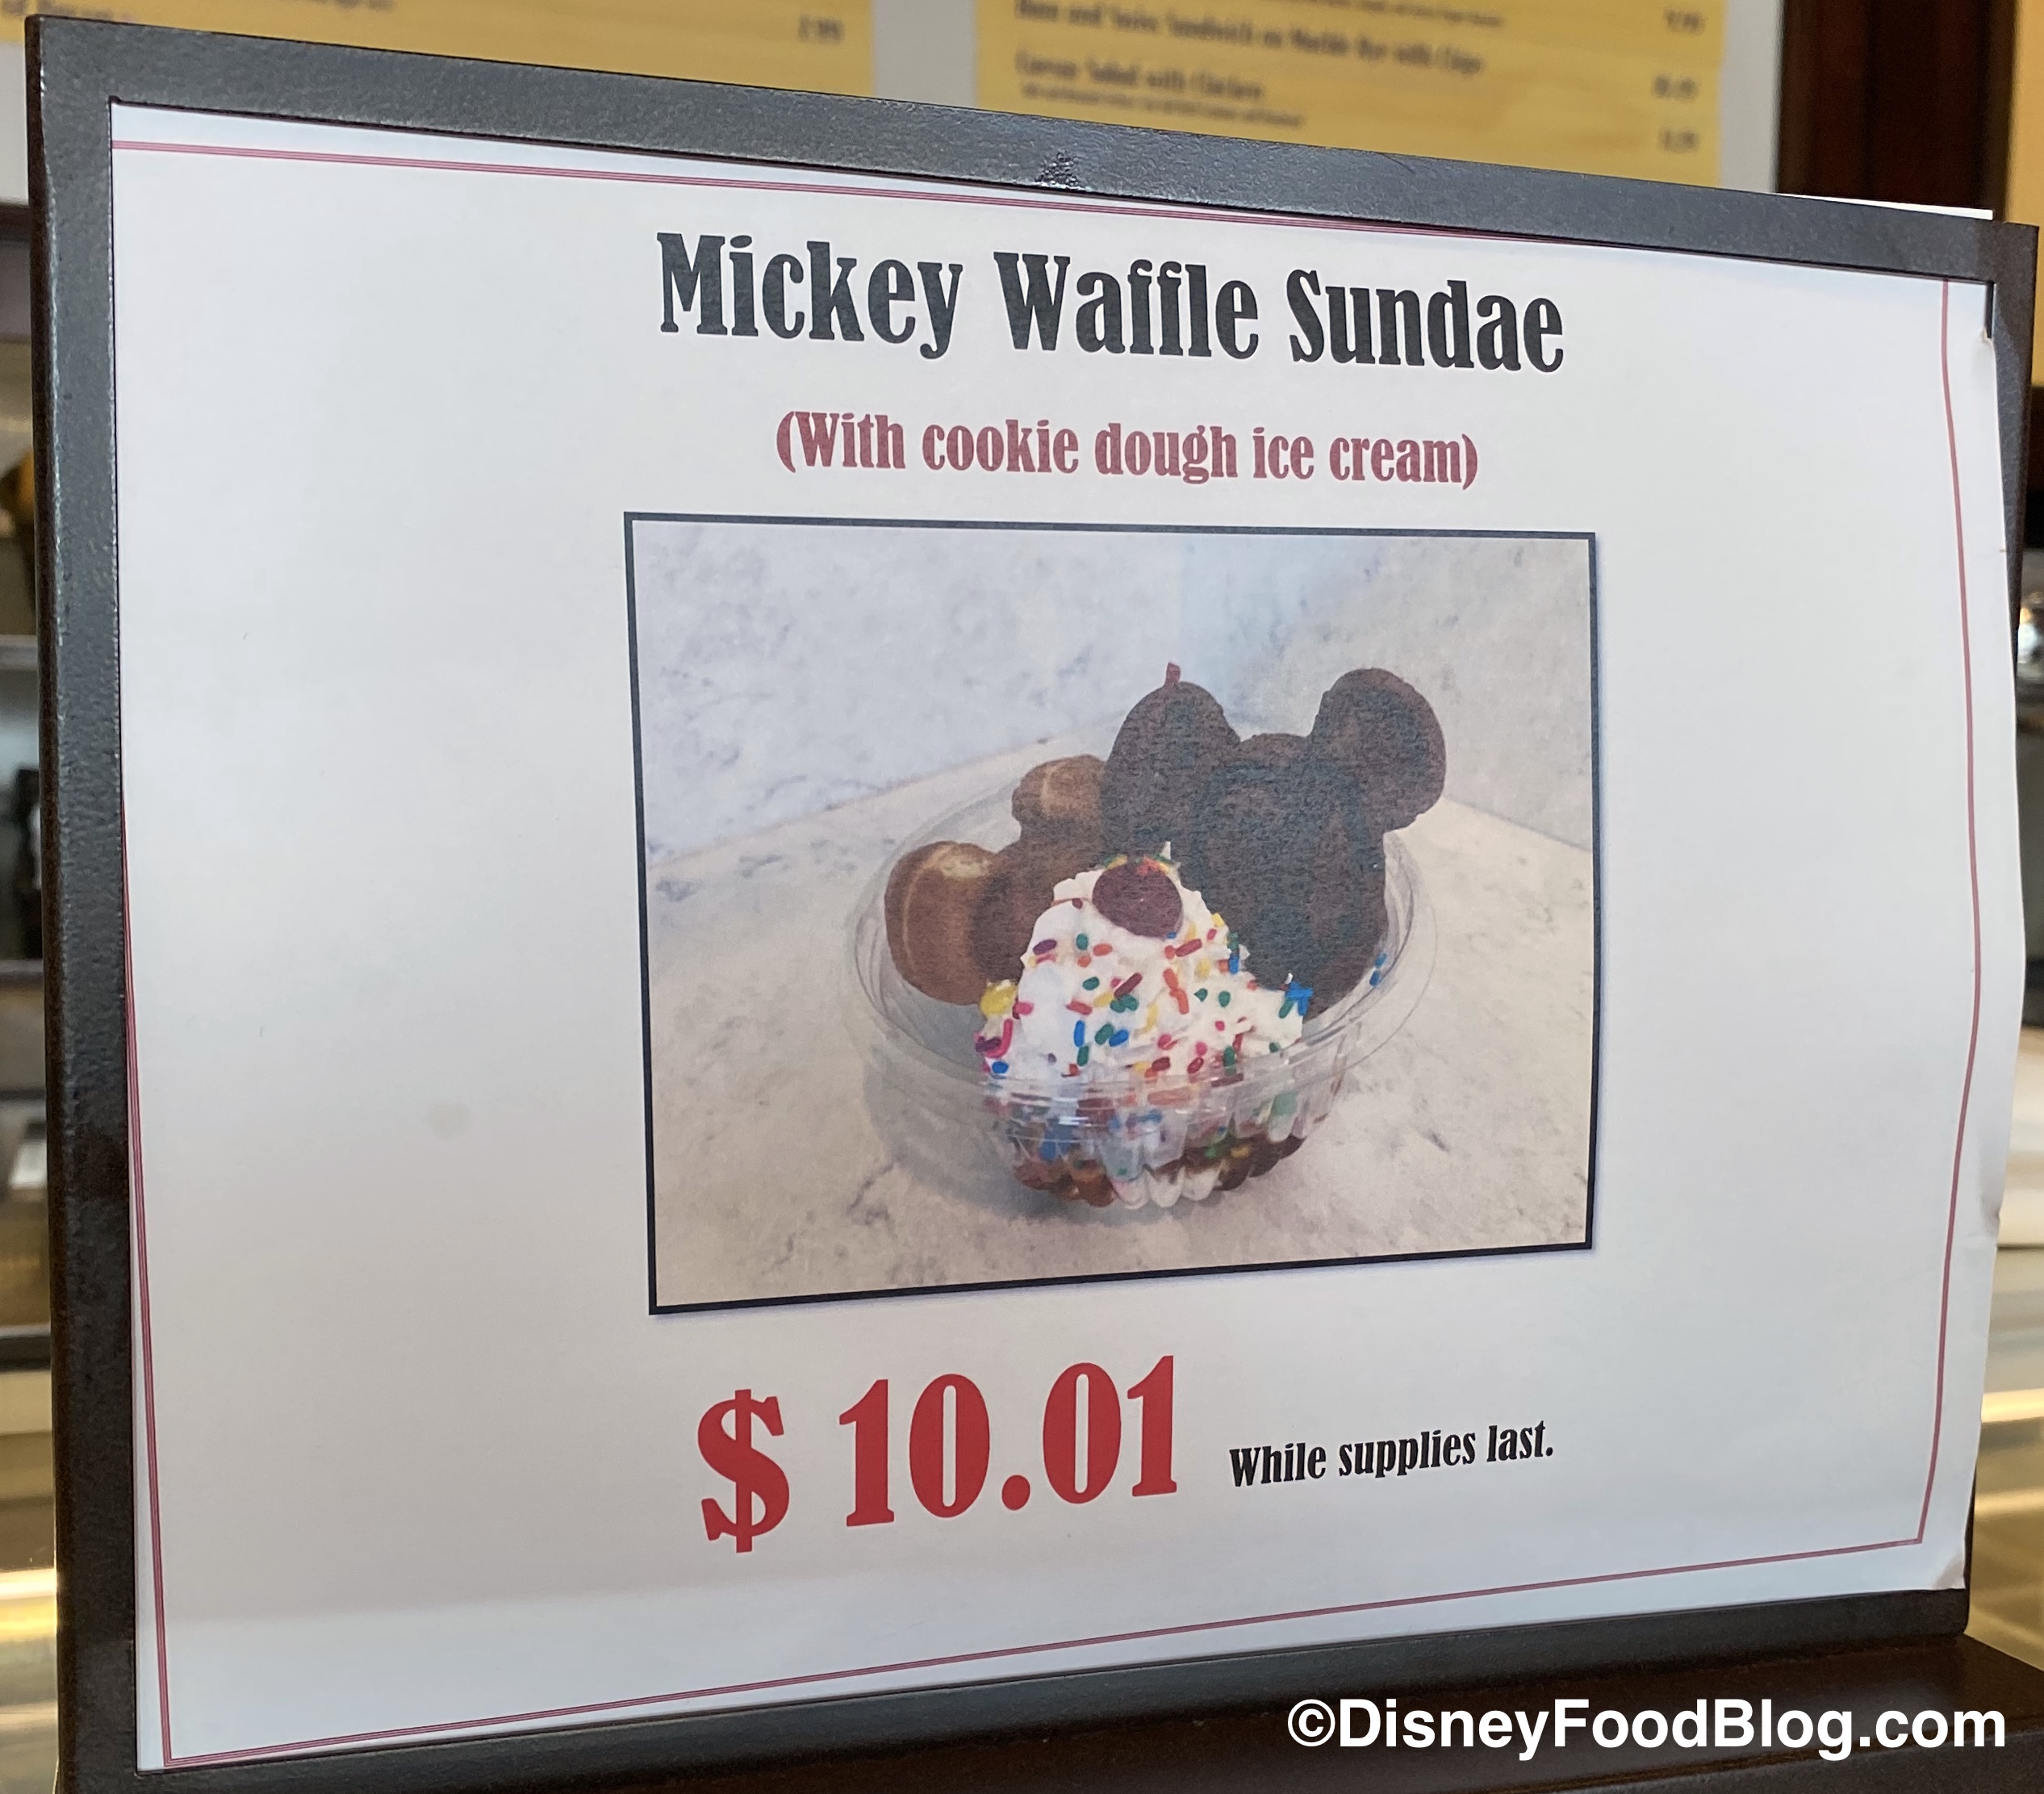 https://www.disneyfoodblog.com/wp-content/uploads/2020/07/boardwalk-bakery-mickey-waffle-sundae-sign.jpg